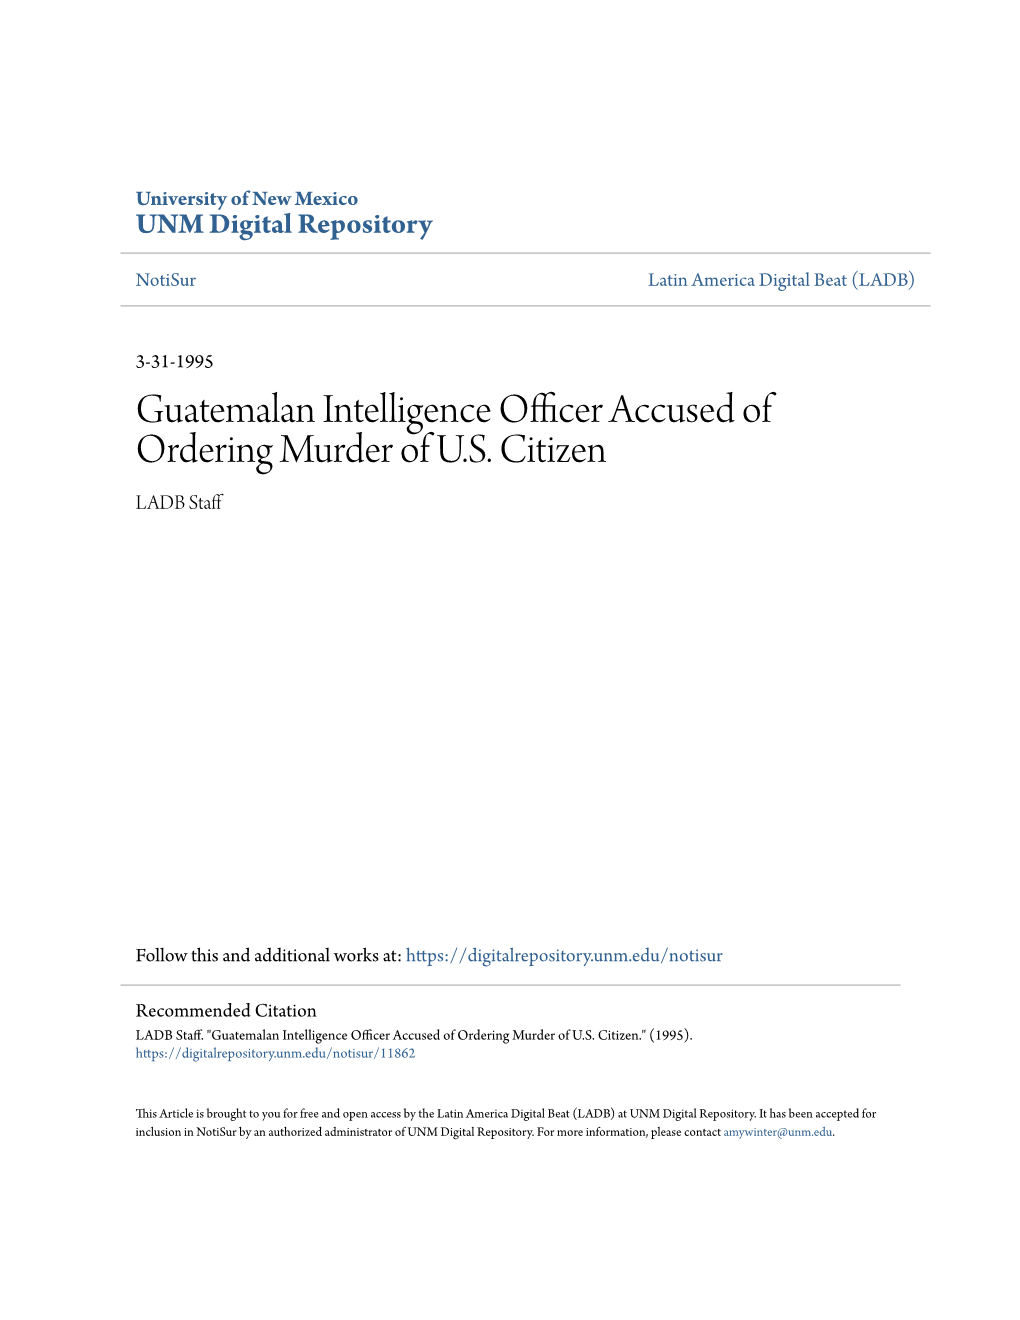 Guatemalan Intelligence Officer Accused of Ordering Murder of U.S. Citizen LADB Staff